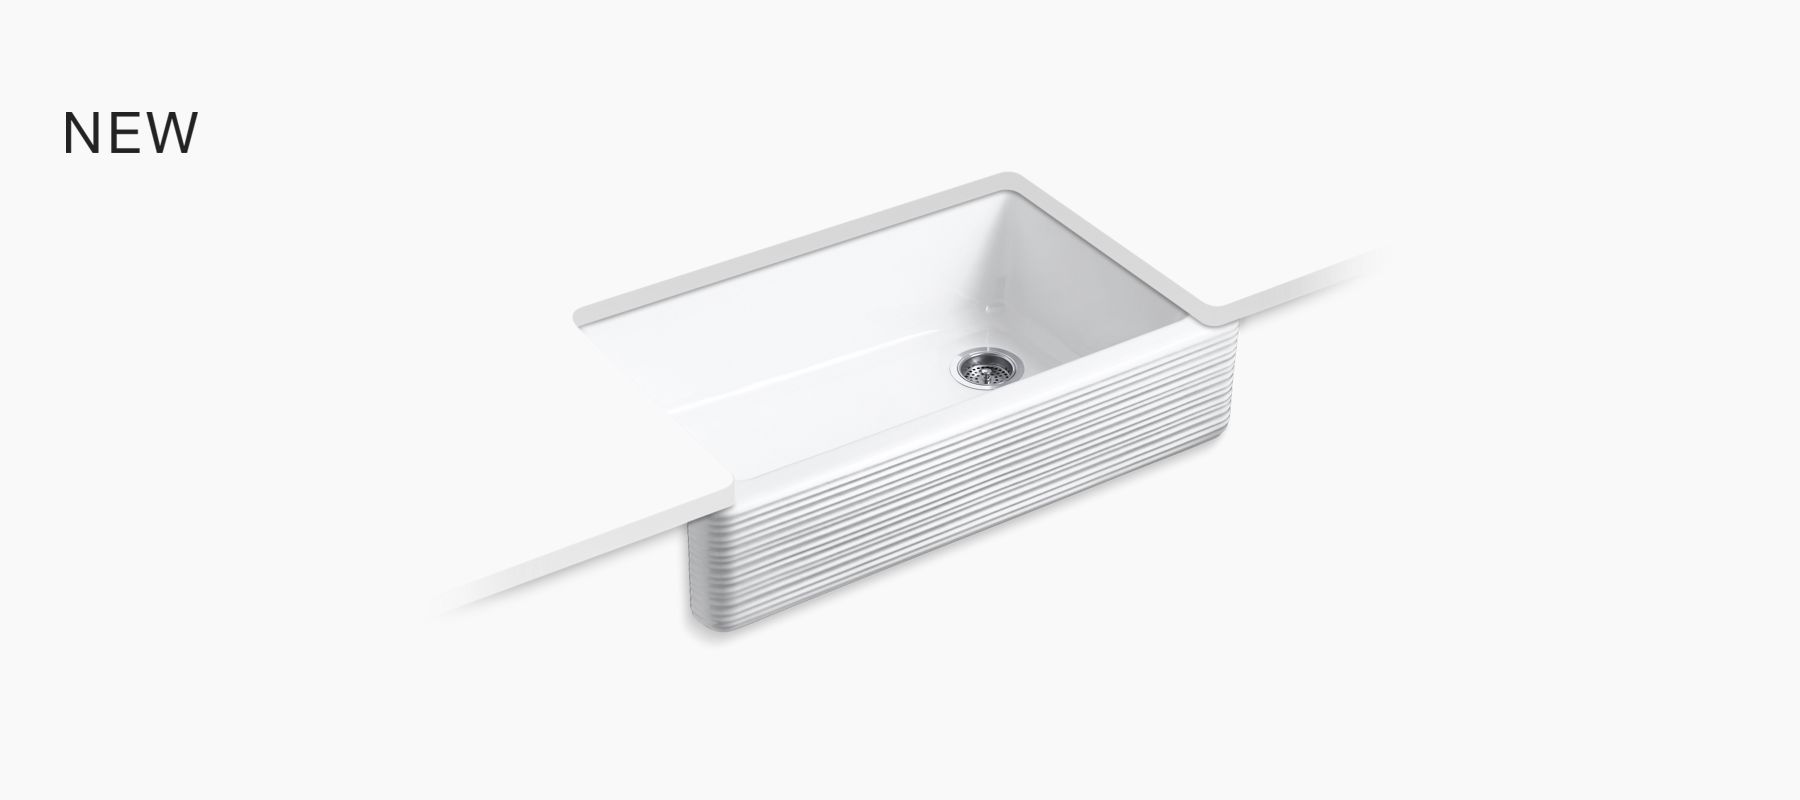 K 8211 4 Taboret Widespread Sink Faucet With Lever Handles Kohler